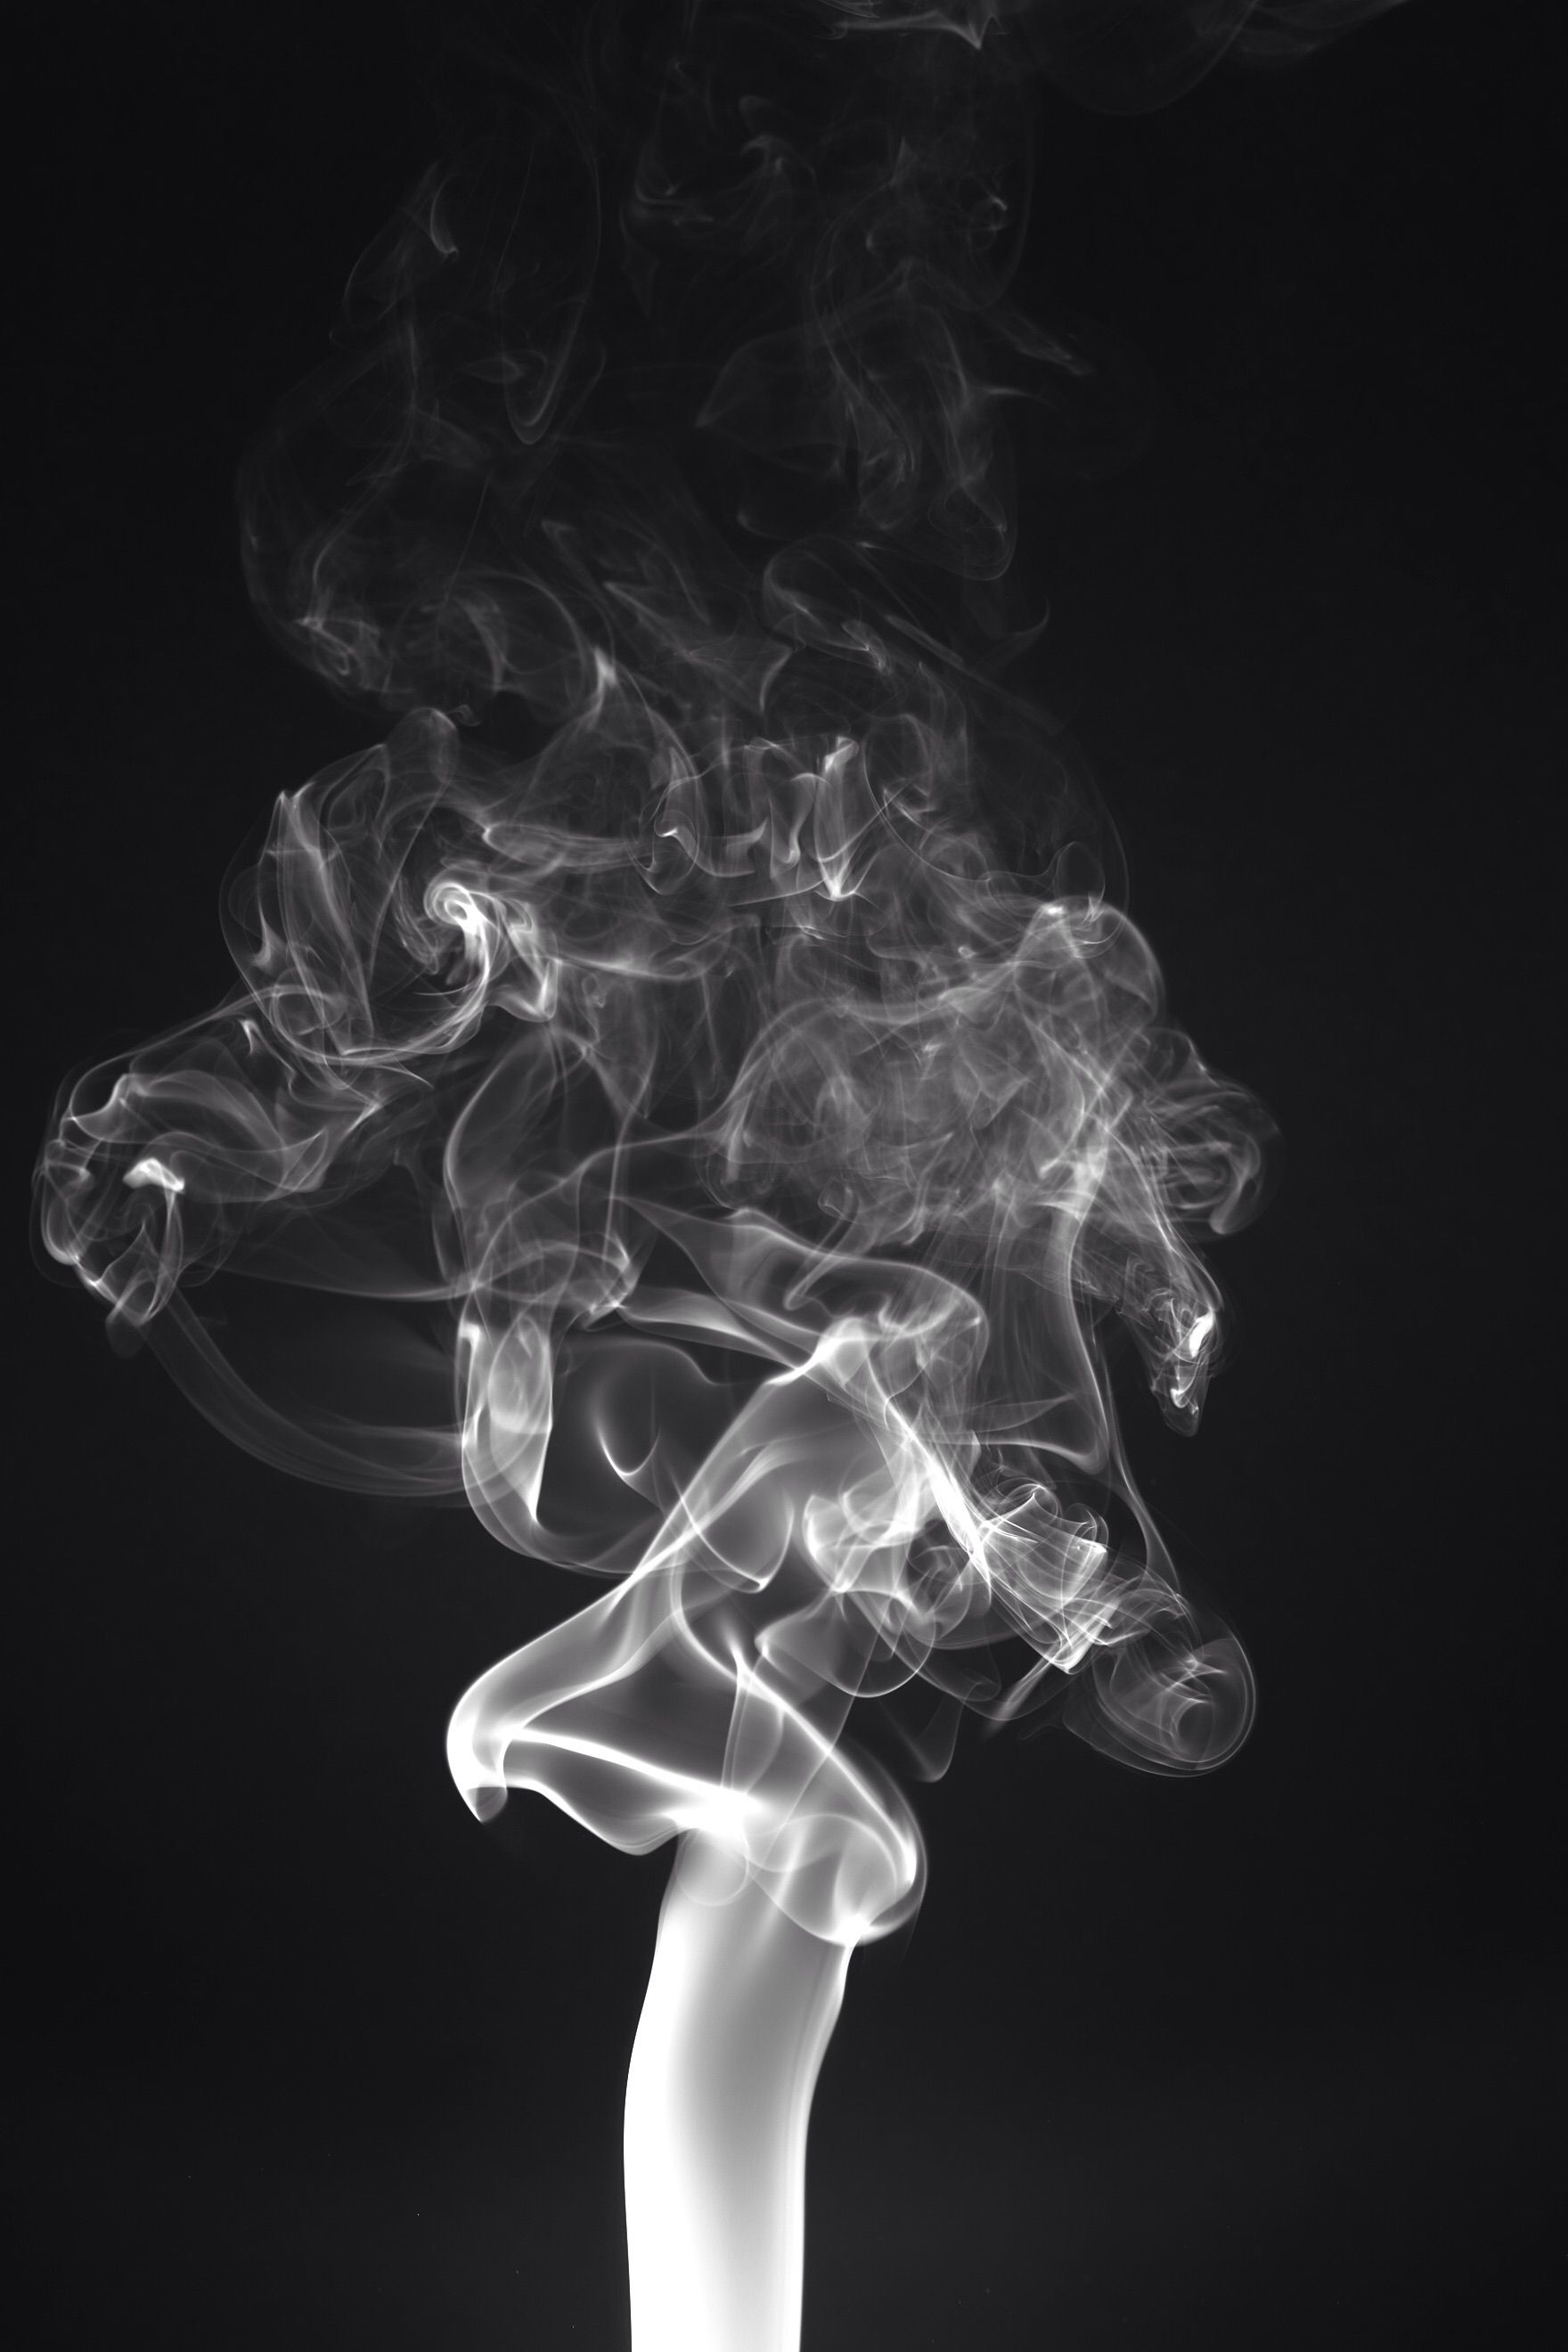 Smoke rising against a black background - Smoke